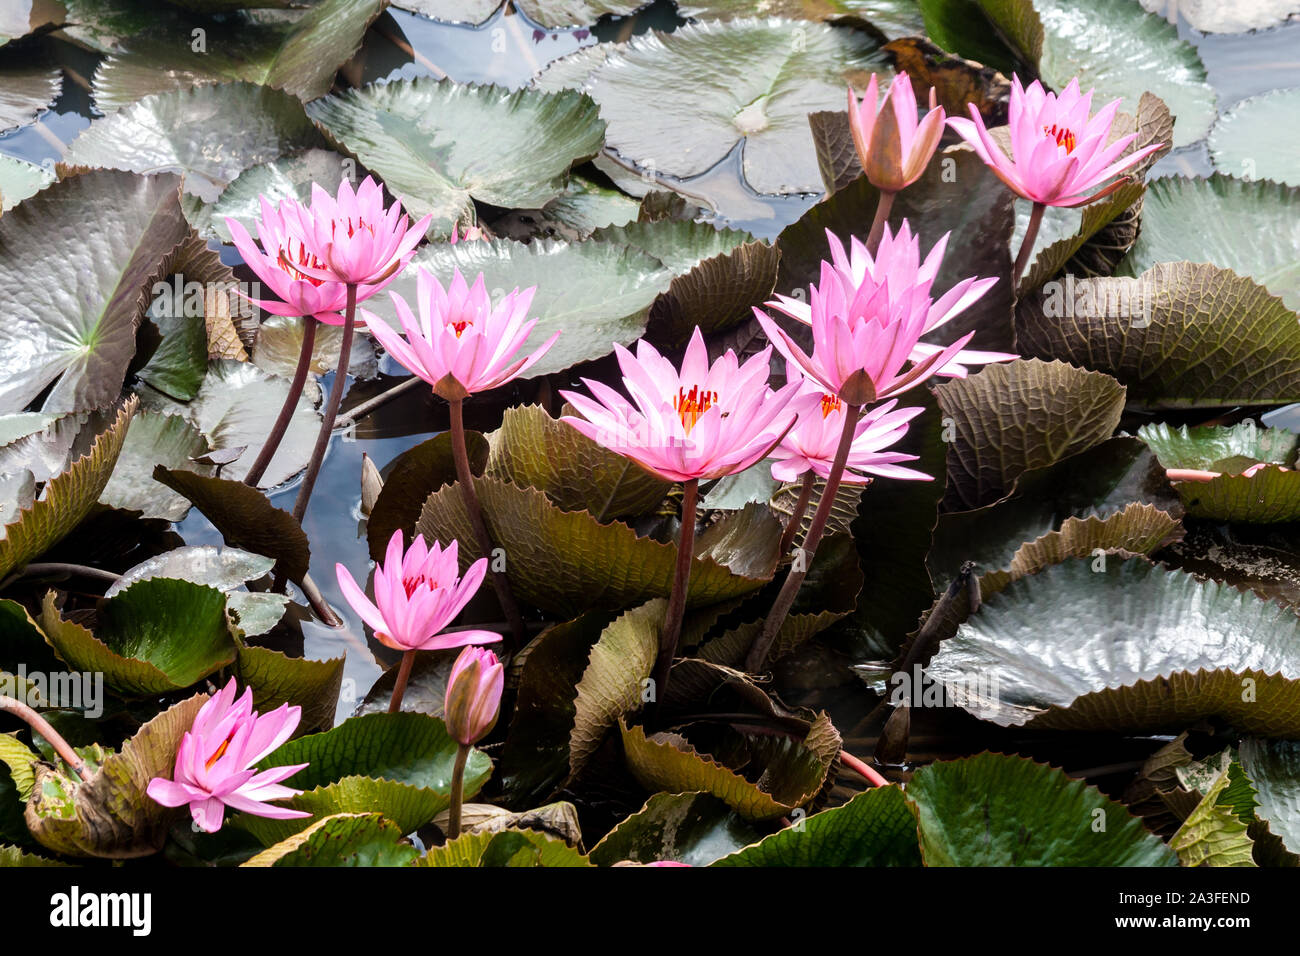 Wilde rosa Seerosen oder Lotusblumen (Nelumbo nucifera) im Wasser. Nymphaea lily im Teich. Indonesien, Papua Neu Guinea Stockfoto